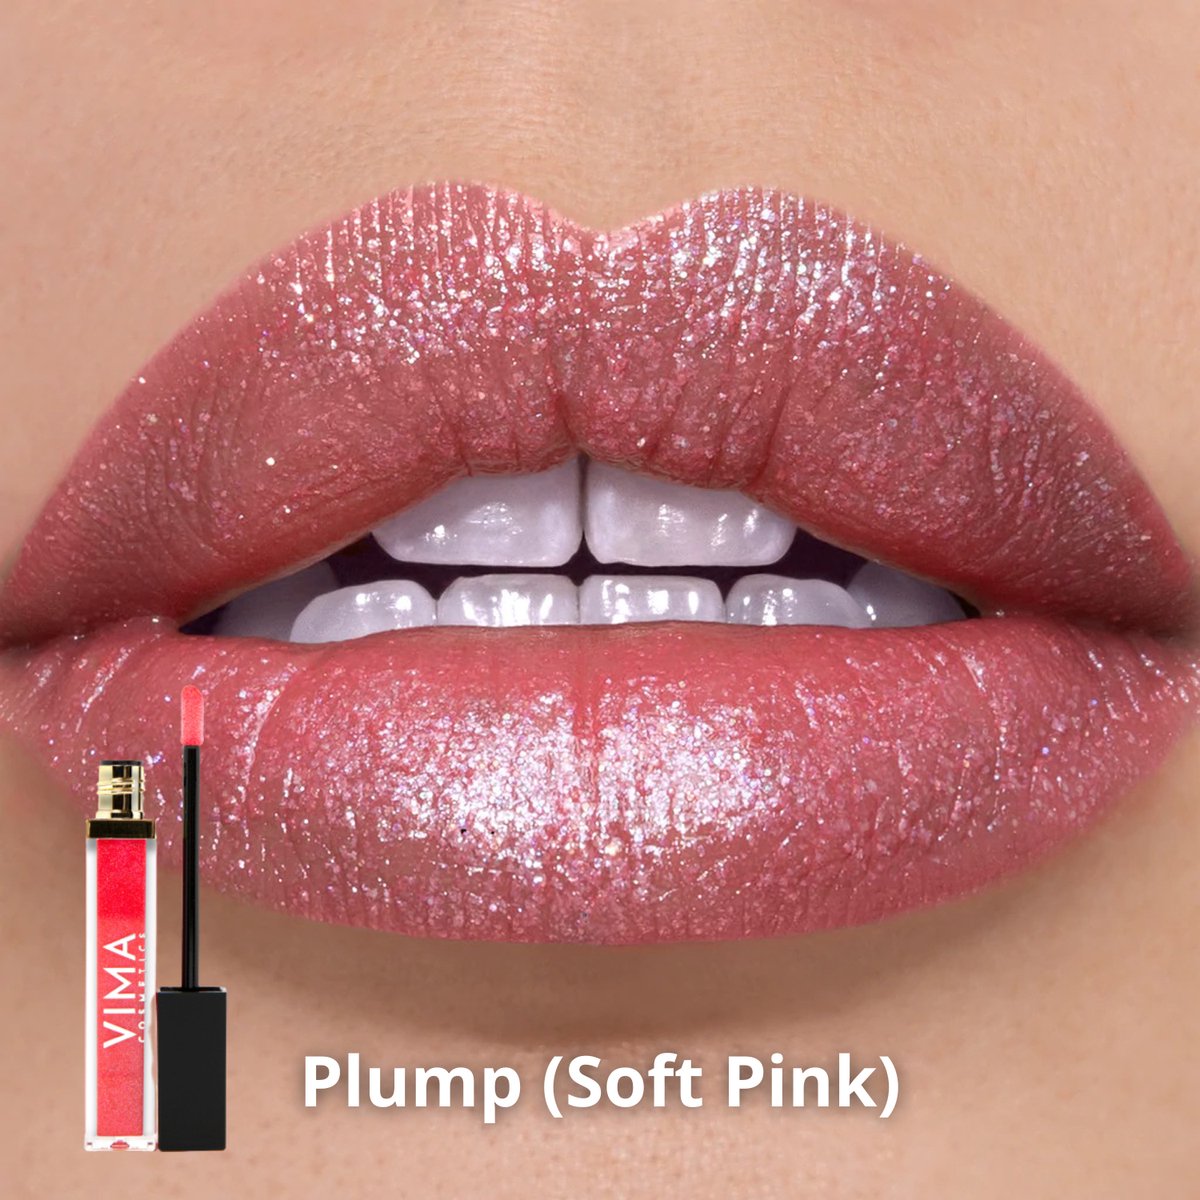 VIMA Lipgloss - Soft Pink (Plump) - Hydraterend - Creamy - Volumegevende Lipgloss